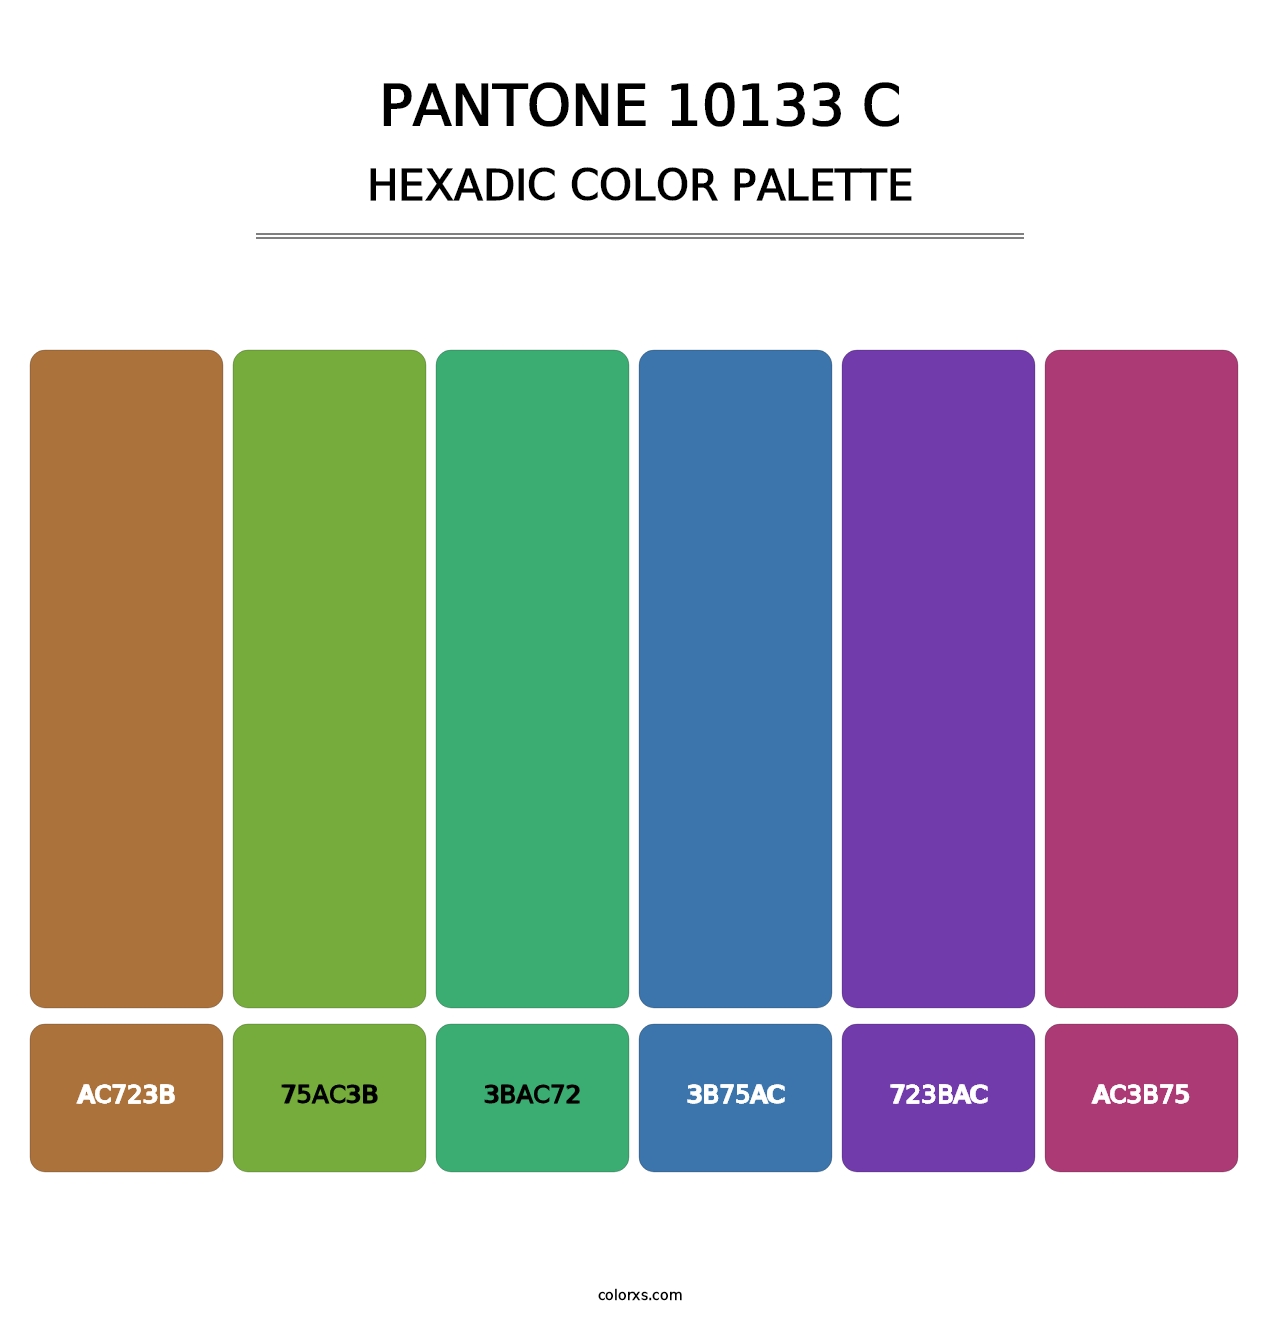 PANTONE 10133 C - Hexadic Color Palette